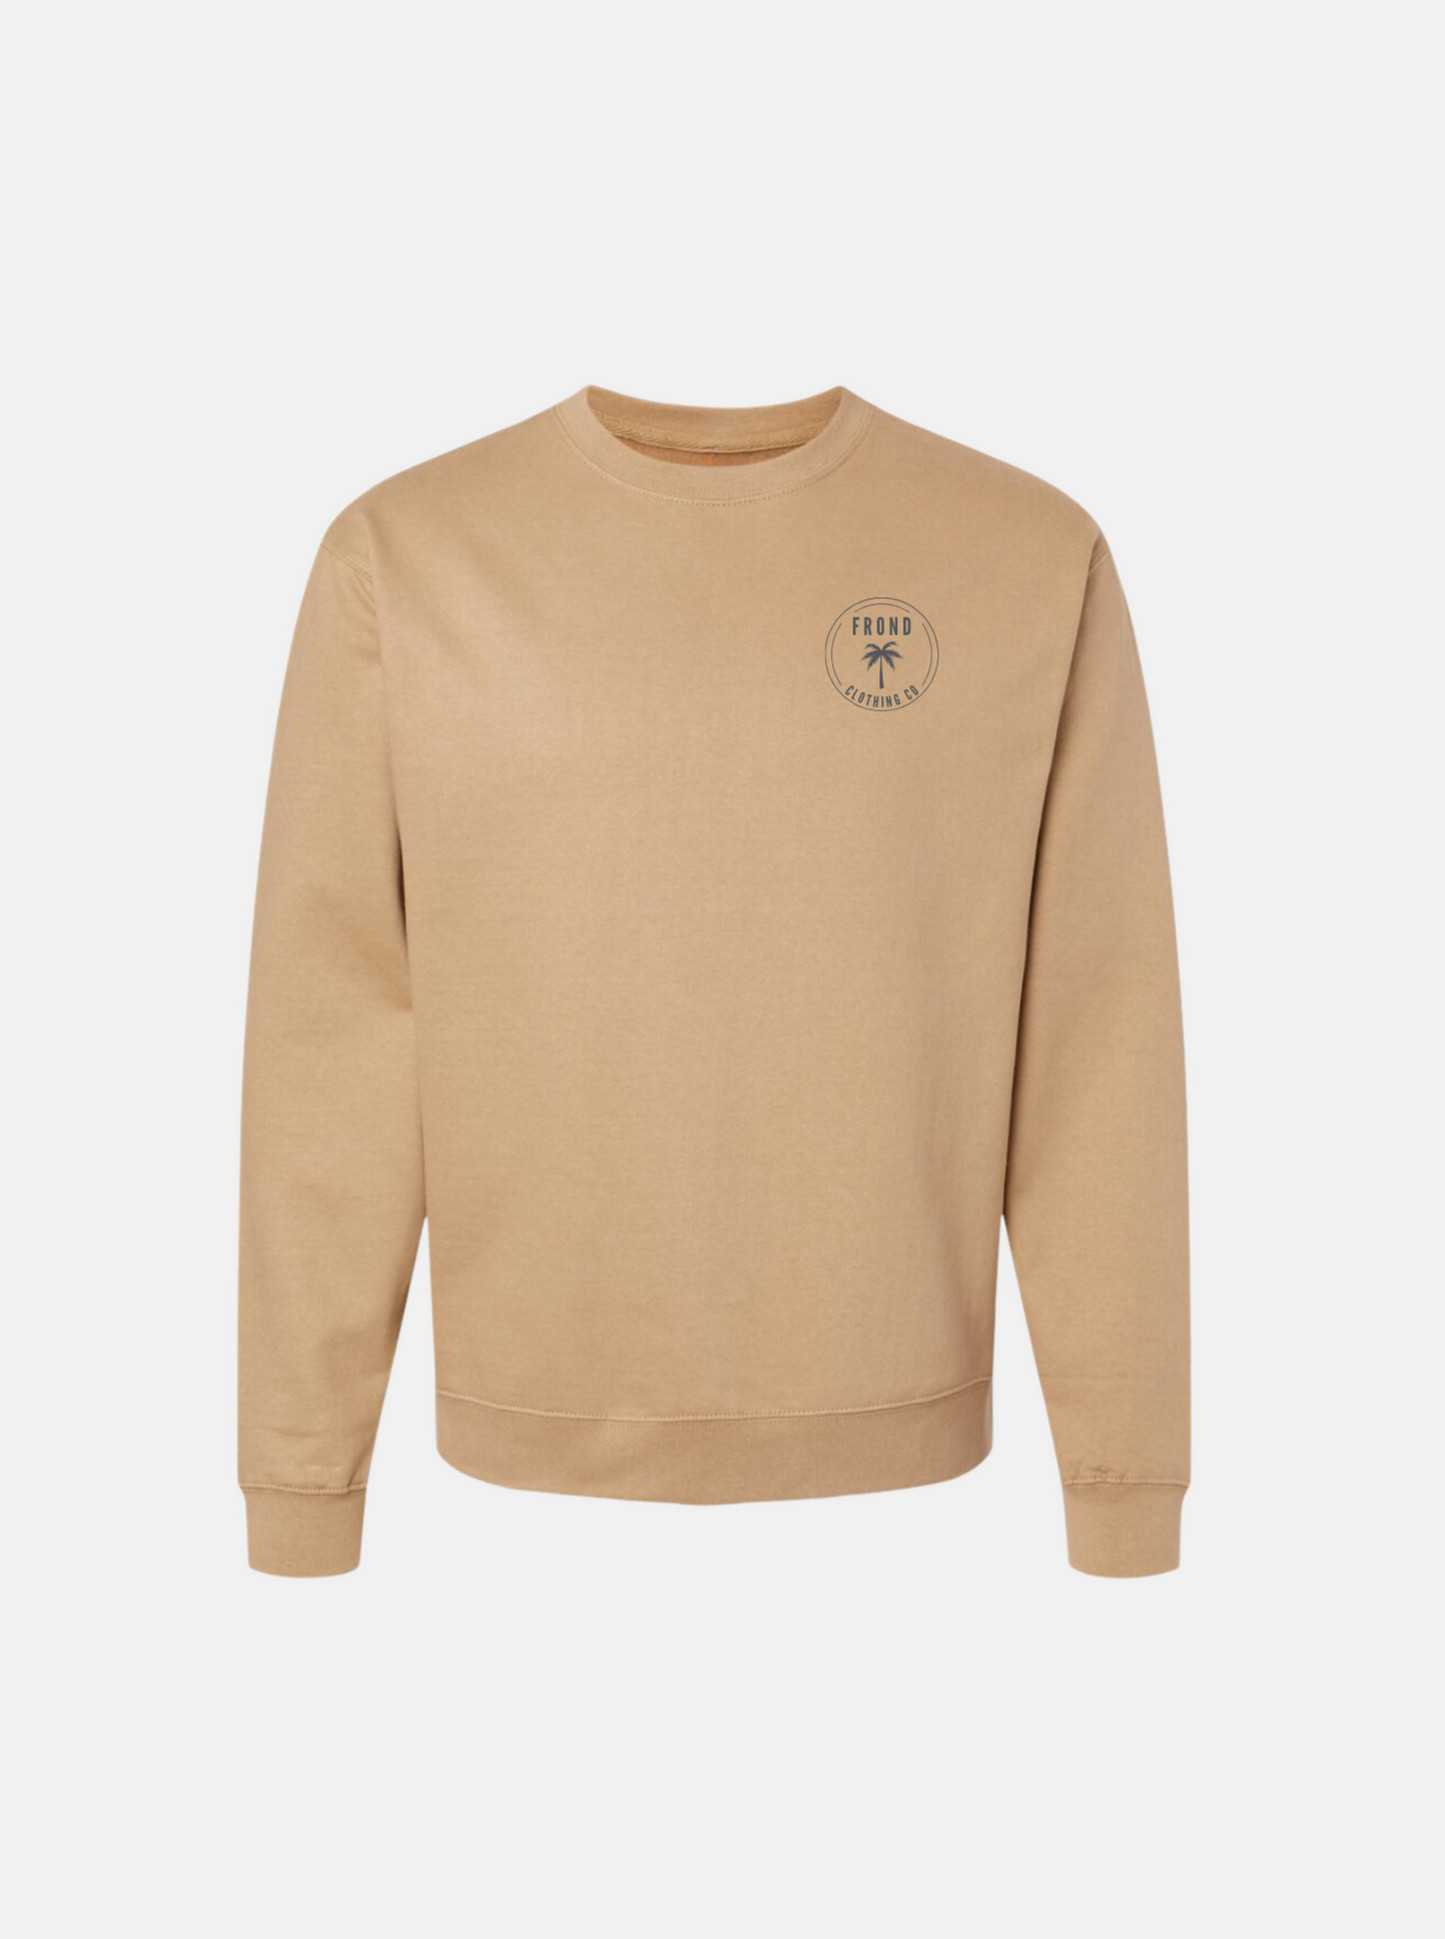 Frond Adult Unisex Sweatshirt, Sandstone